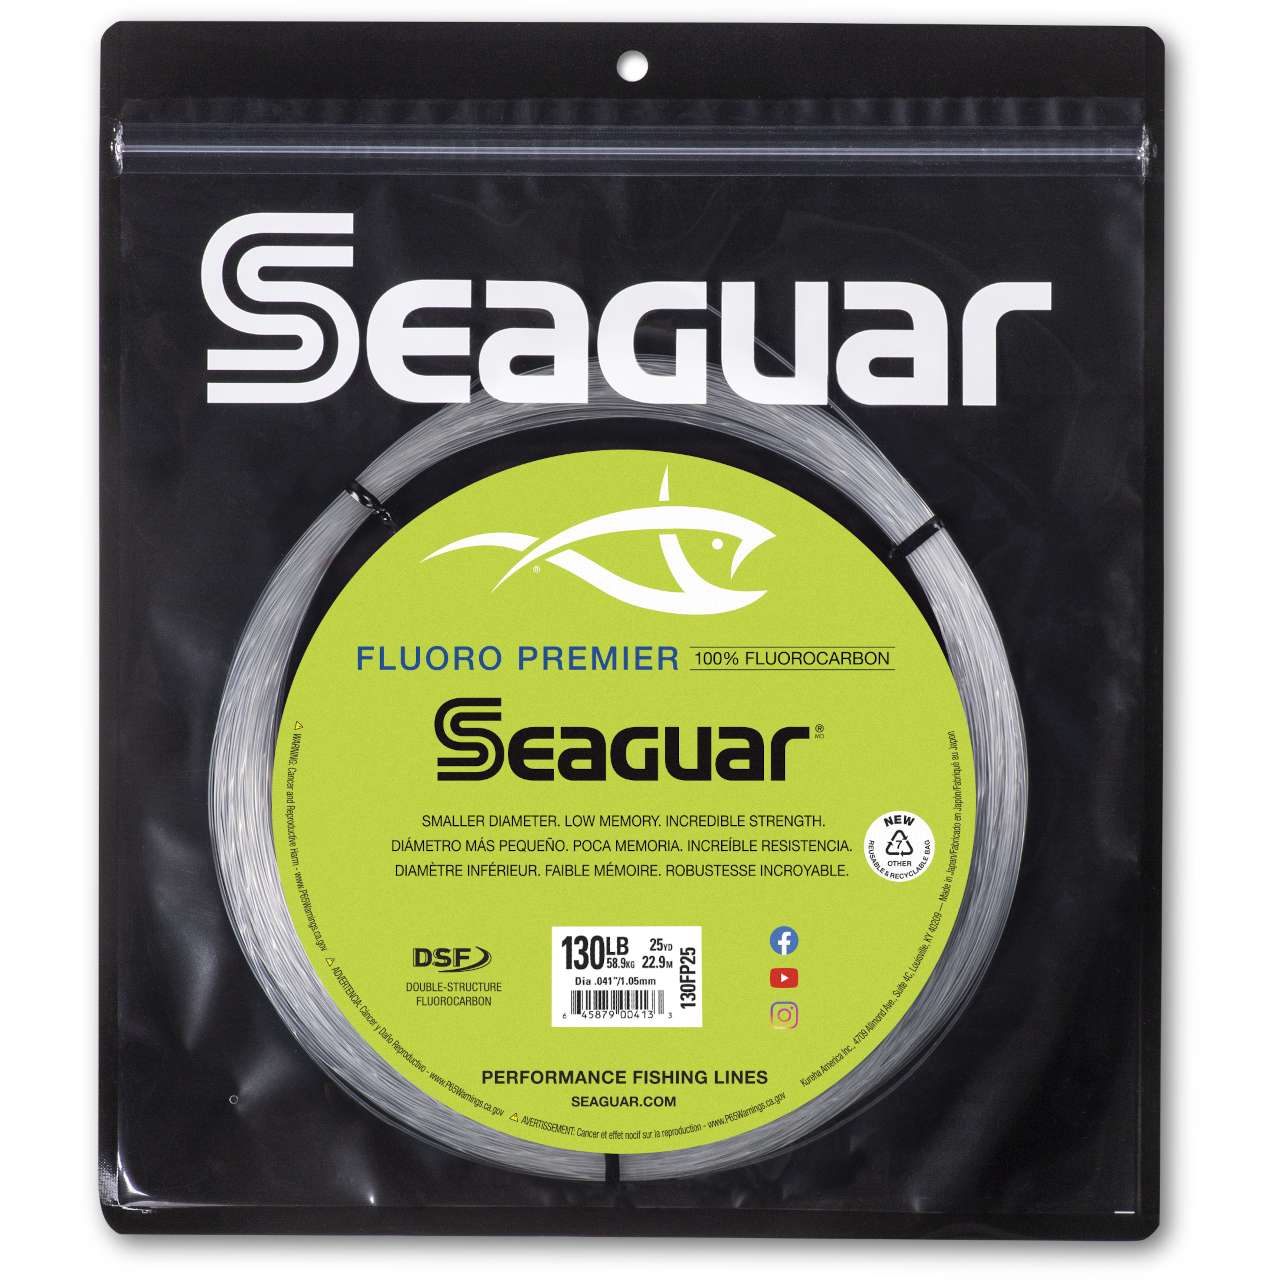 Seaguar Fluoro Premier Big Game Fluorocarbon Leader Material 25yds